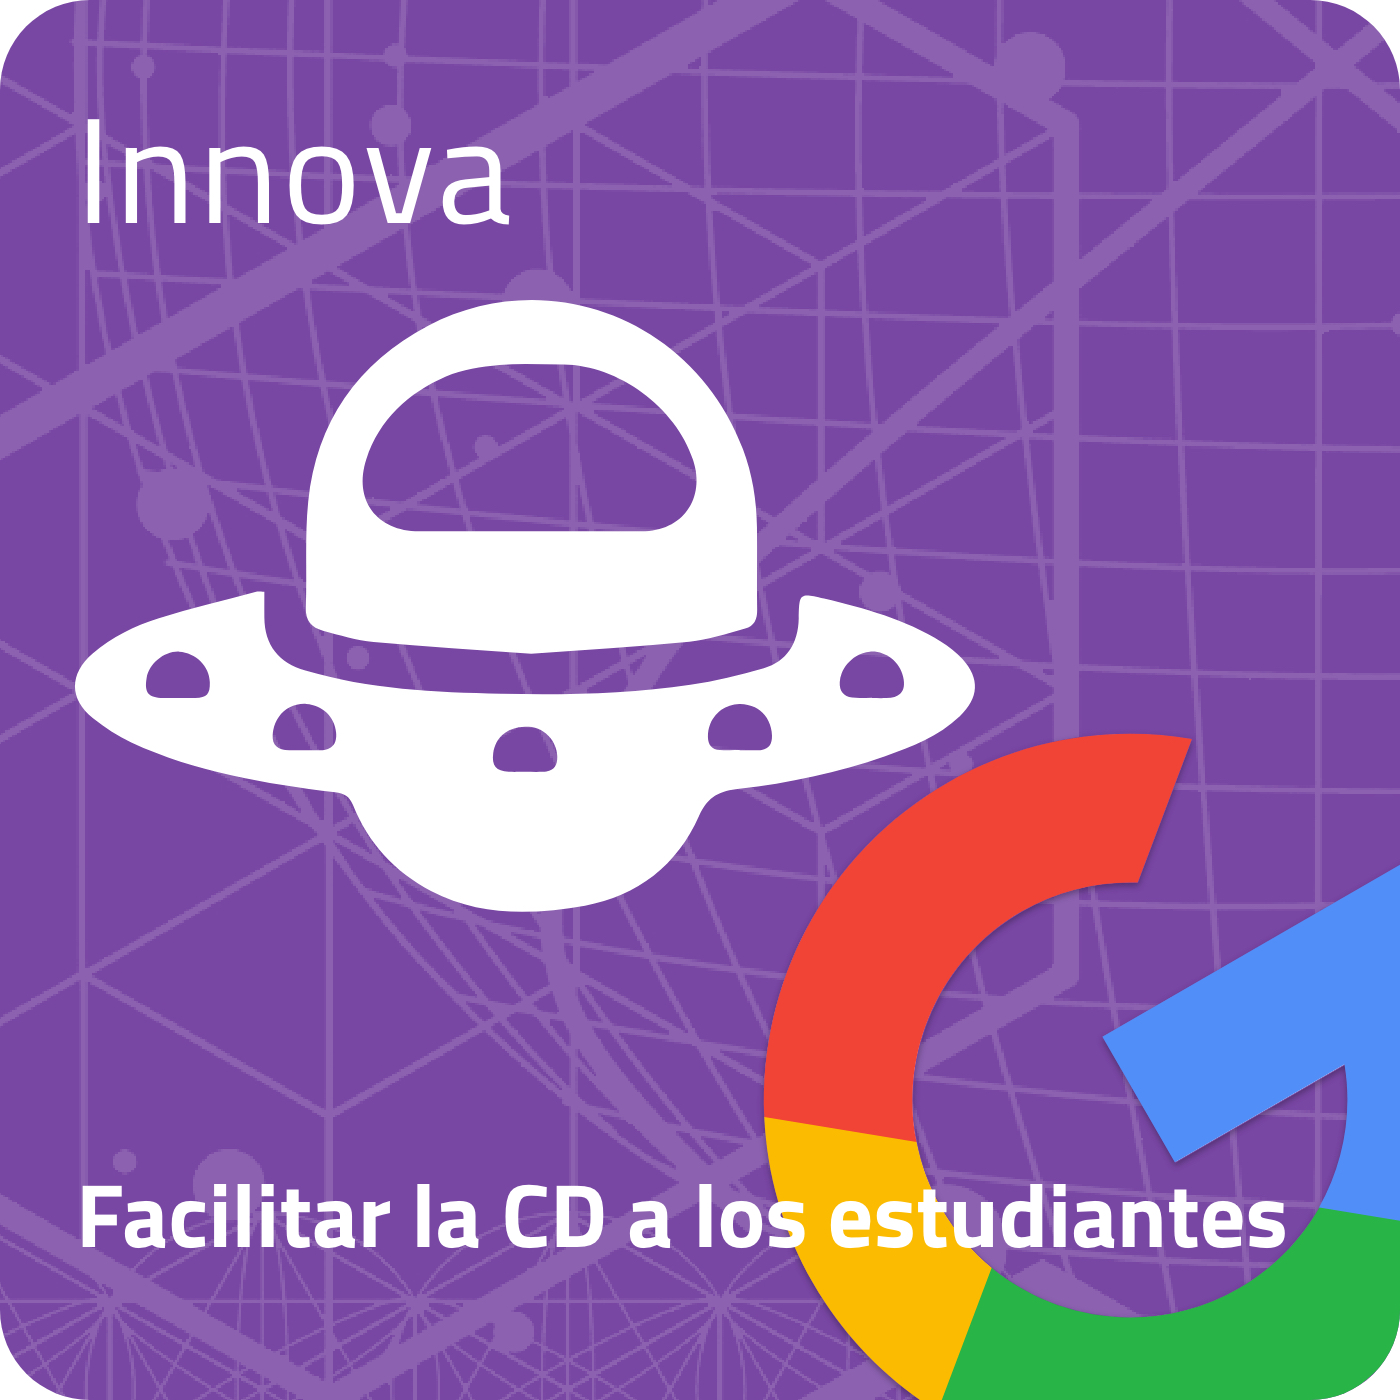 FACILITAR CD AL ESTUDIANTE - Innova con Google (I Edición)